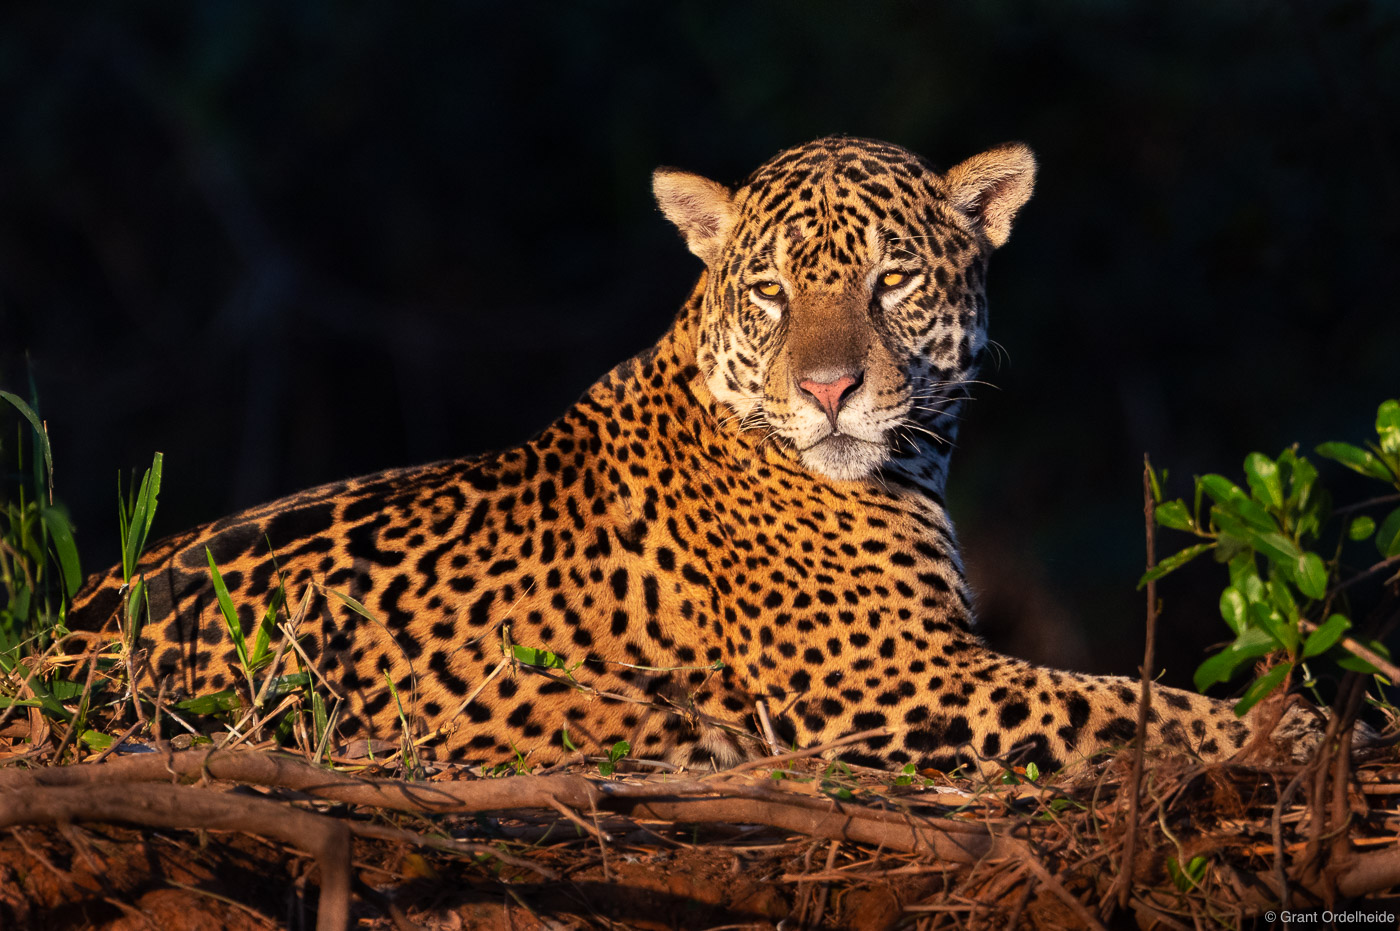 A wild jaguar soaking in the sunset light in Brazil's Pantanal.